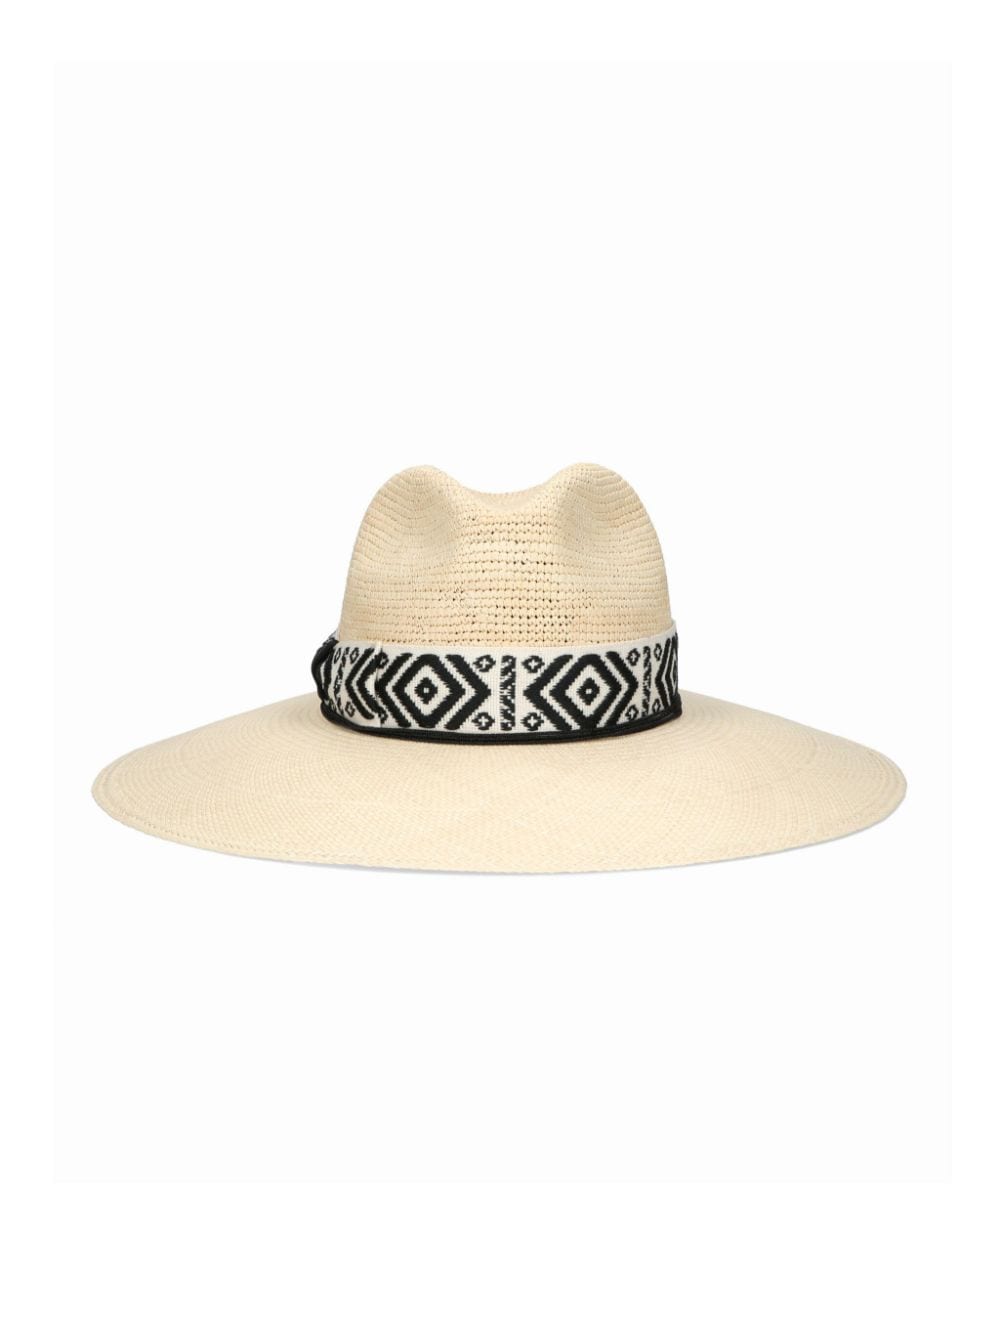 Borsalino Sophie Panama hoed met gehaakt detail - Beige